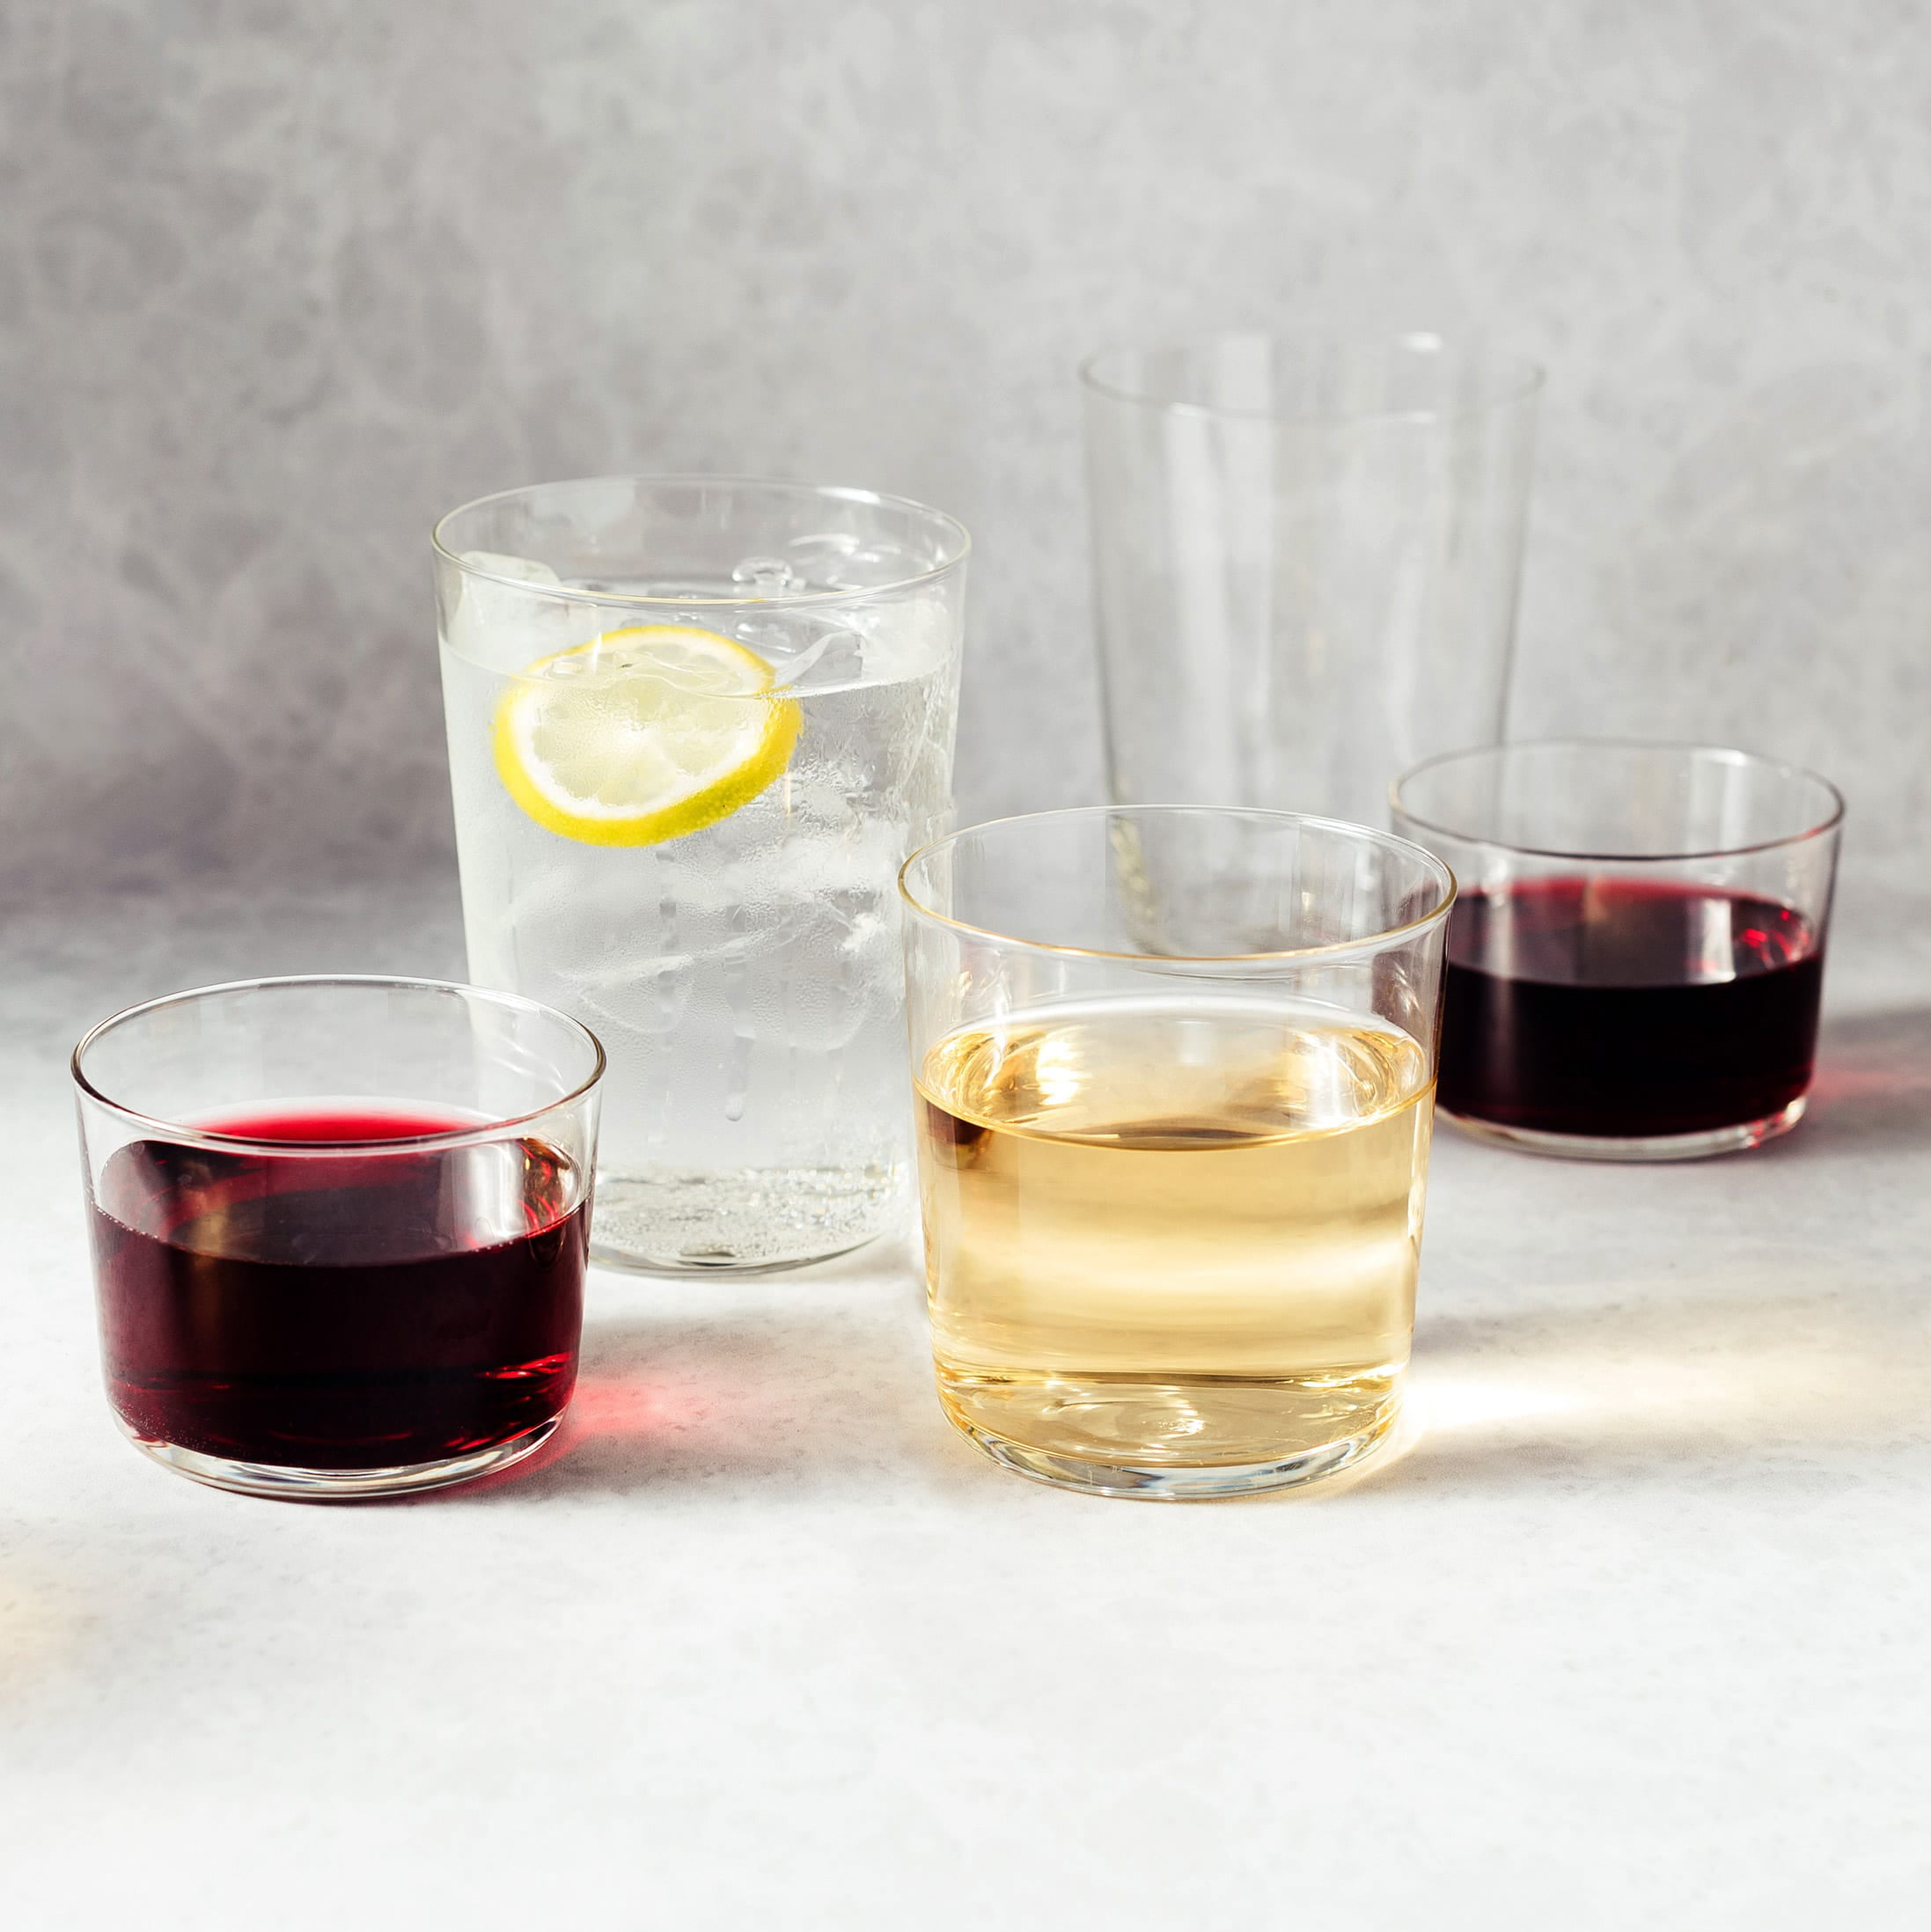 Viski Bodega Glasses - Stackable Drinking Glasses Set - Modern